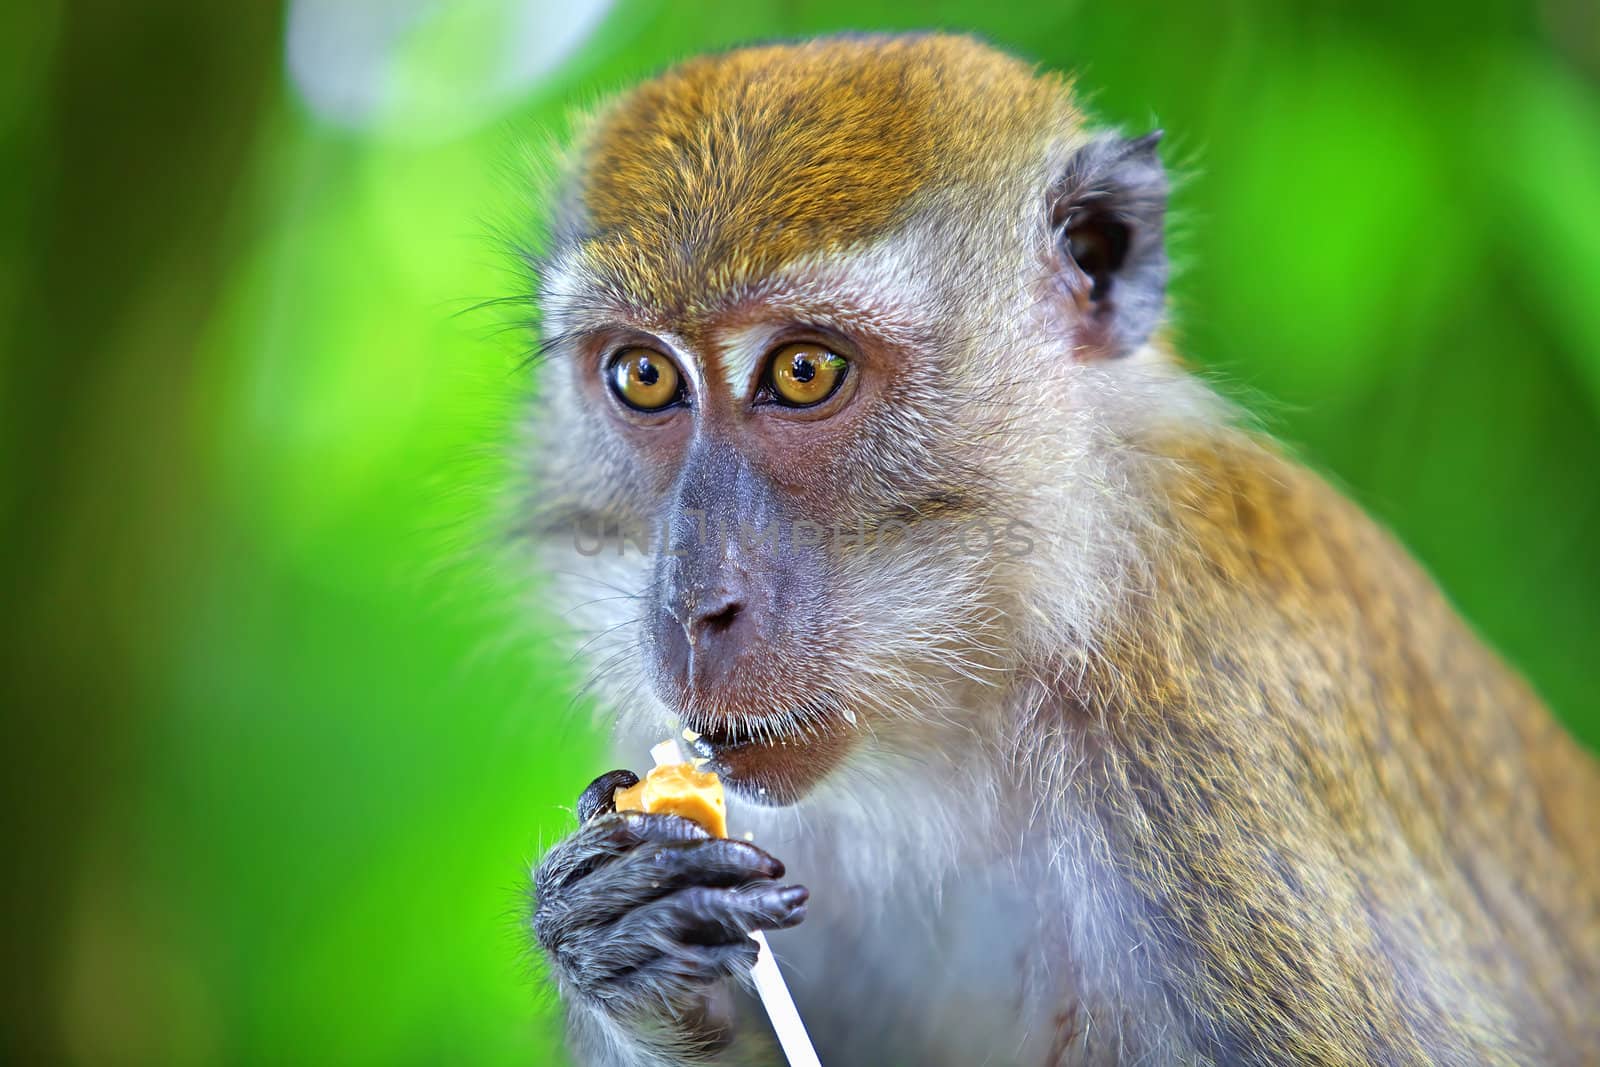 Portrait of a Macaque monkey eating a lollipop.